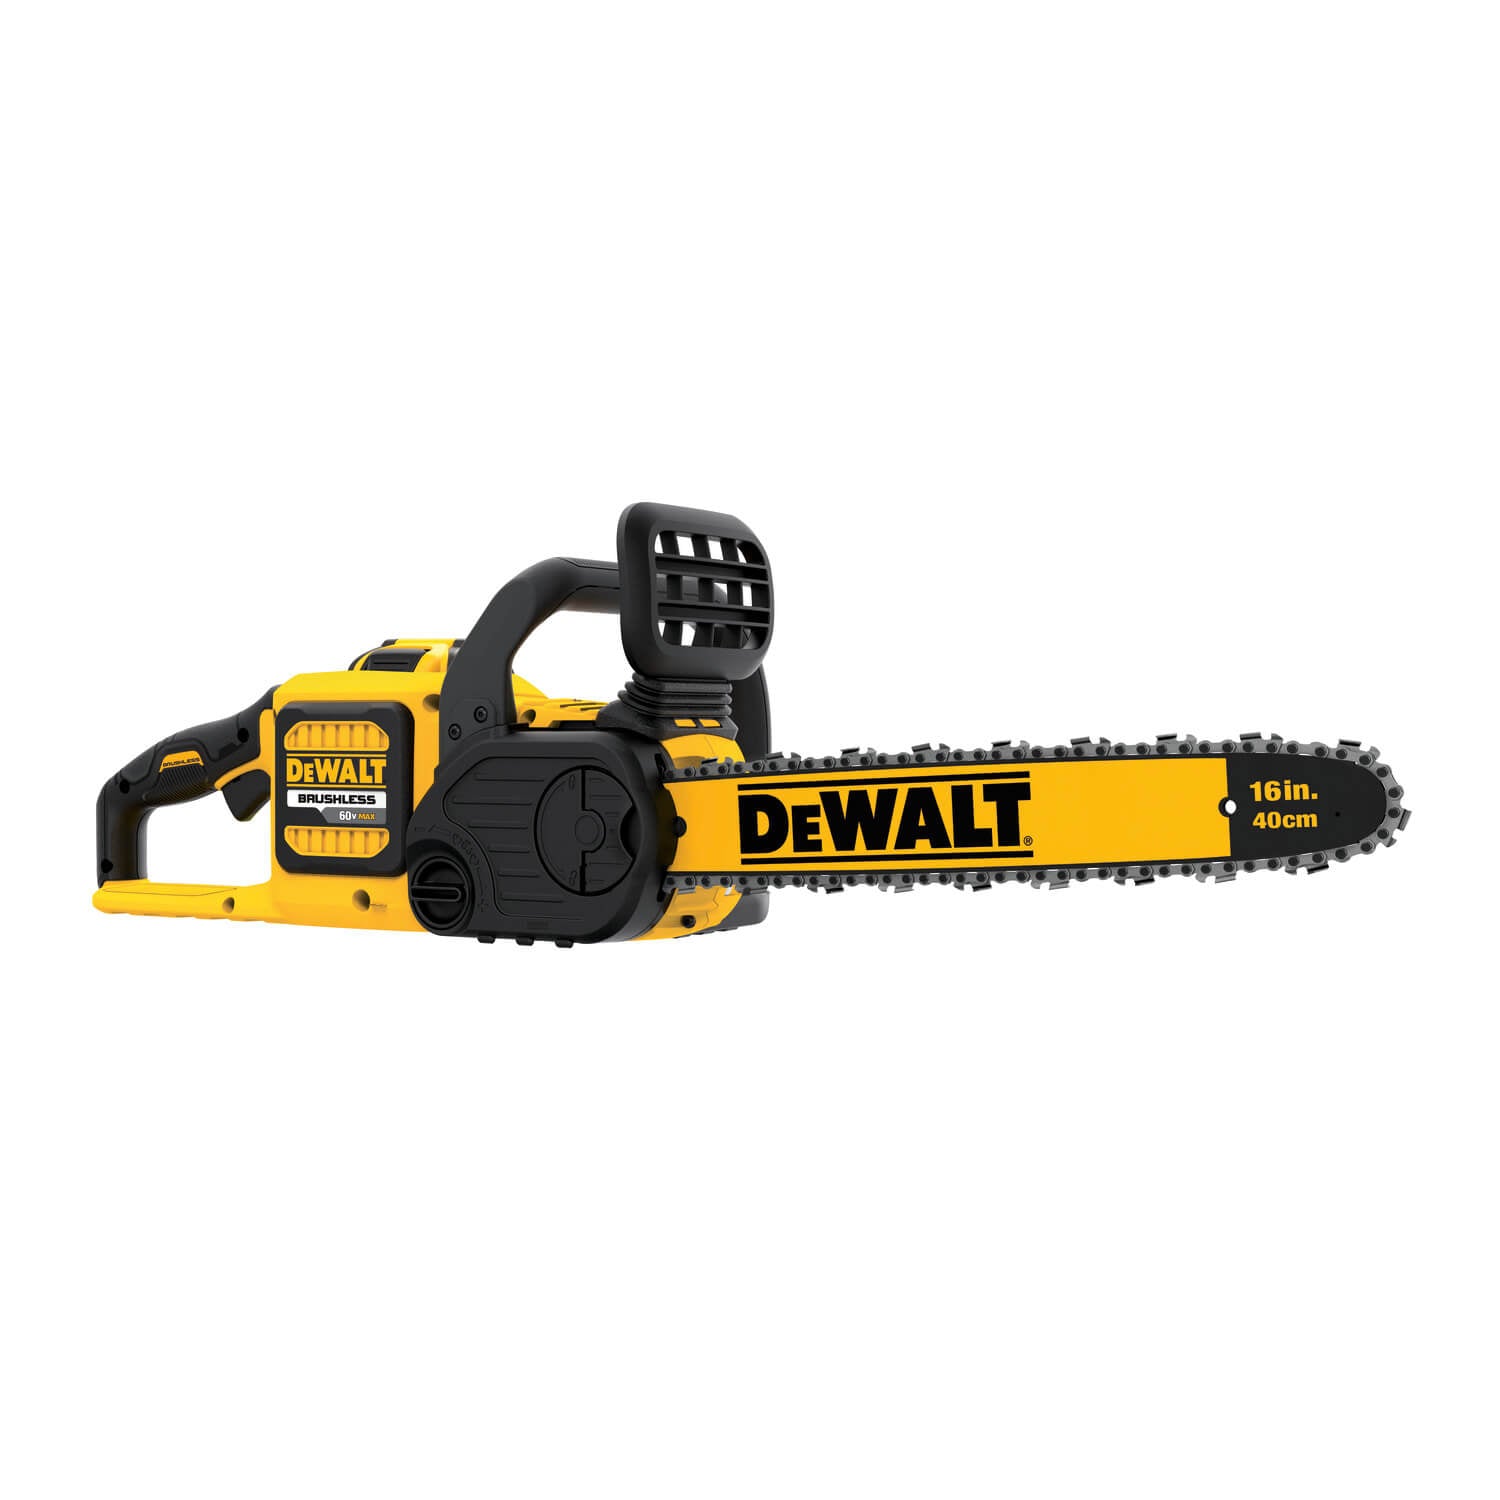 DEWALT DCCS670X1 FLEXVOLT 60V MAX Brushless Chainsaw, 3.0AH battery - wise-line-tools